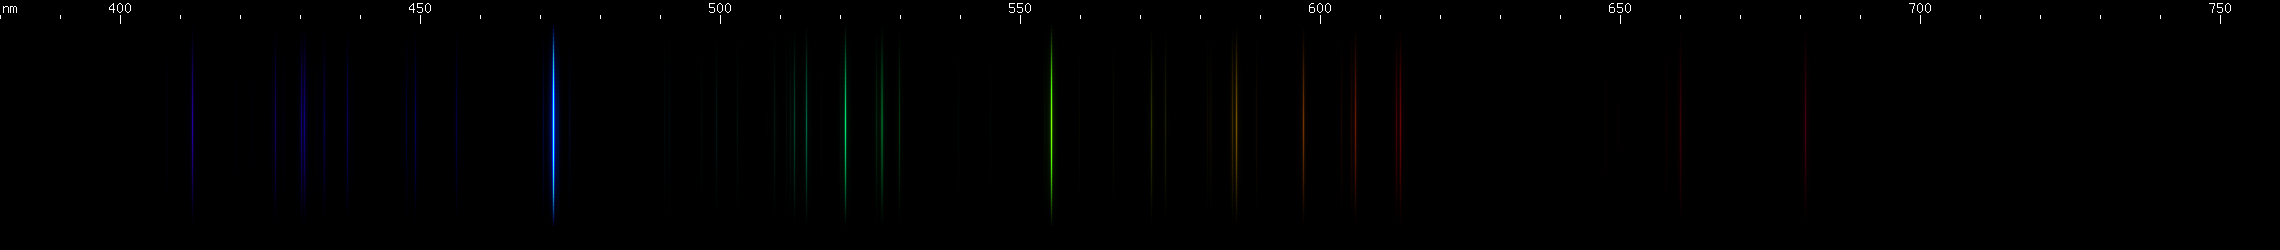 Spectral Lines of Bismuth